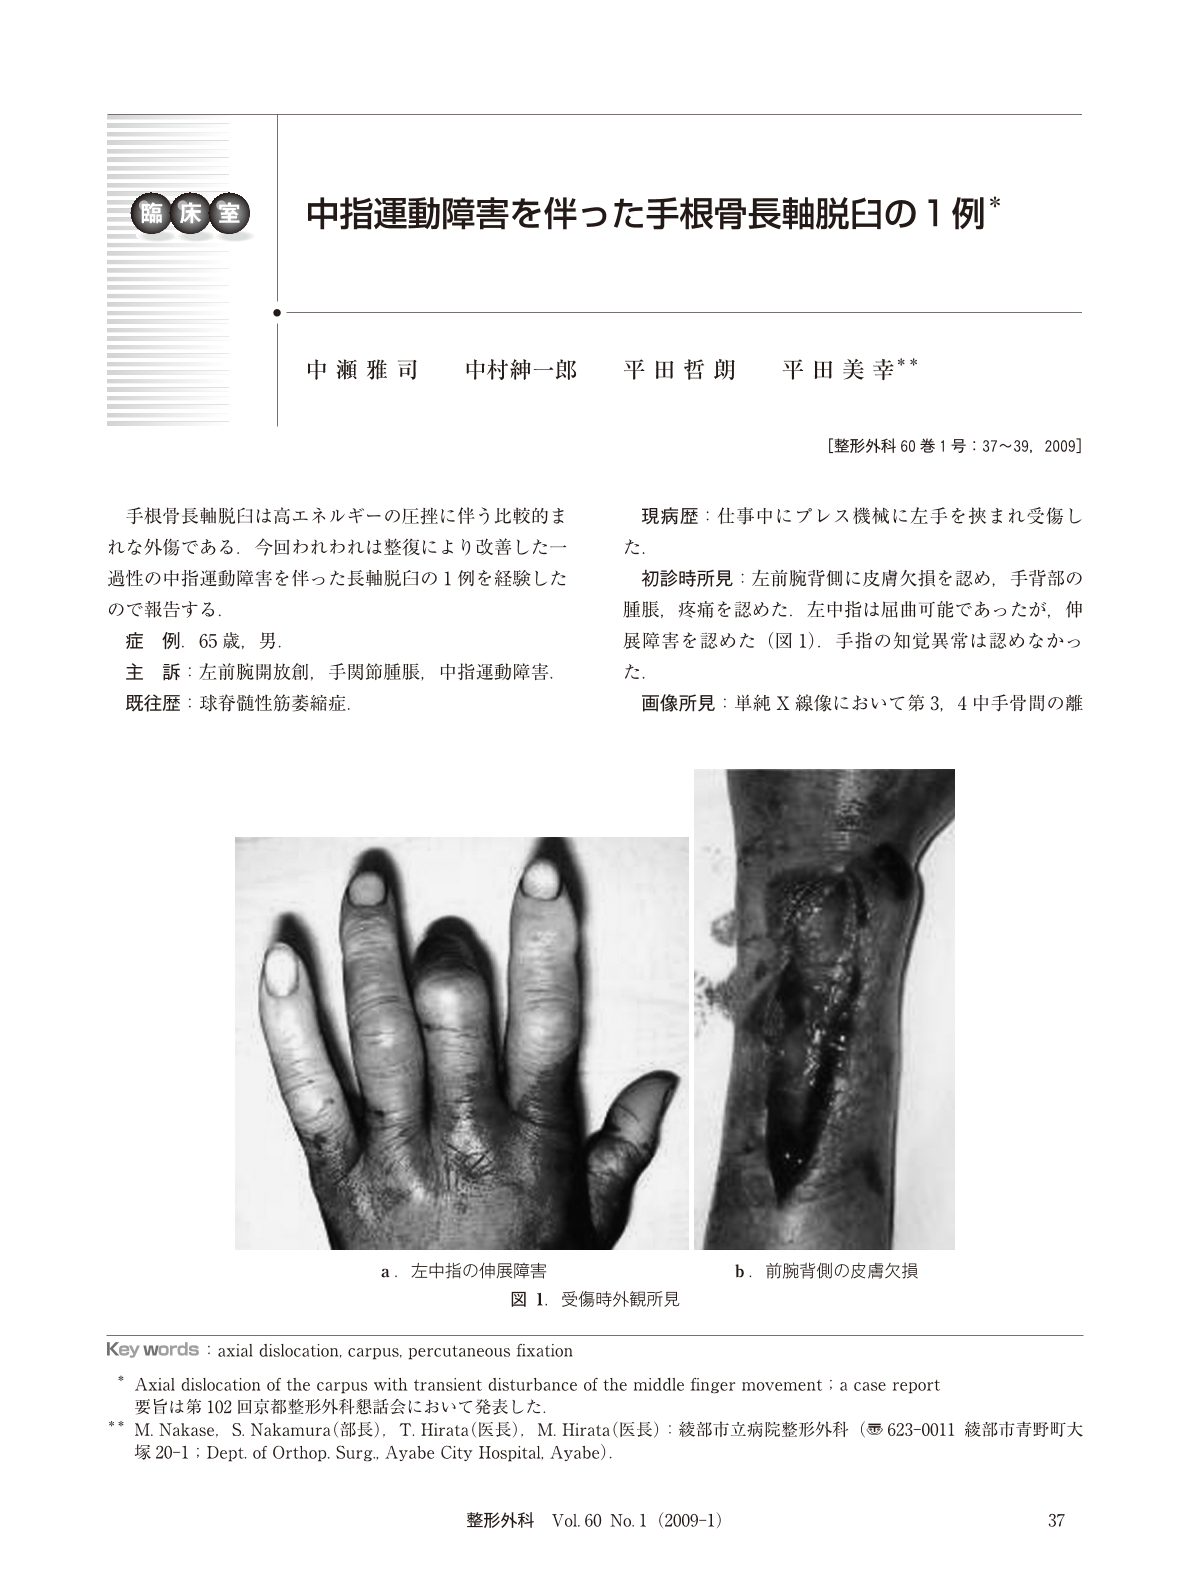 中指運動障害を伴った手根骨長軸脱臼の1例 臨床雑誌整形外科 60巻1号 医書 Jp